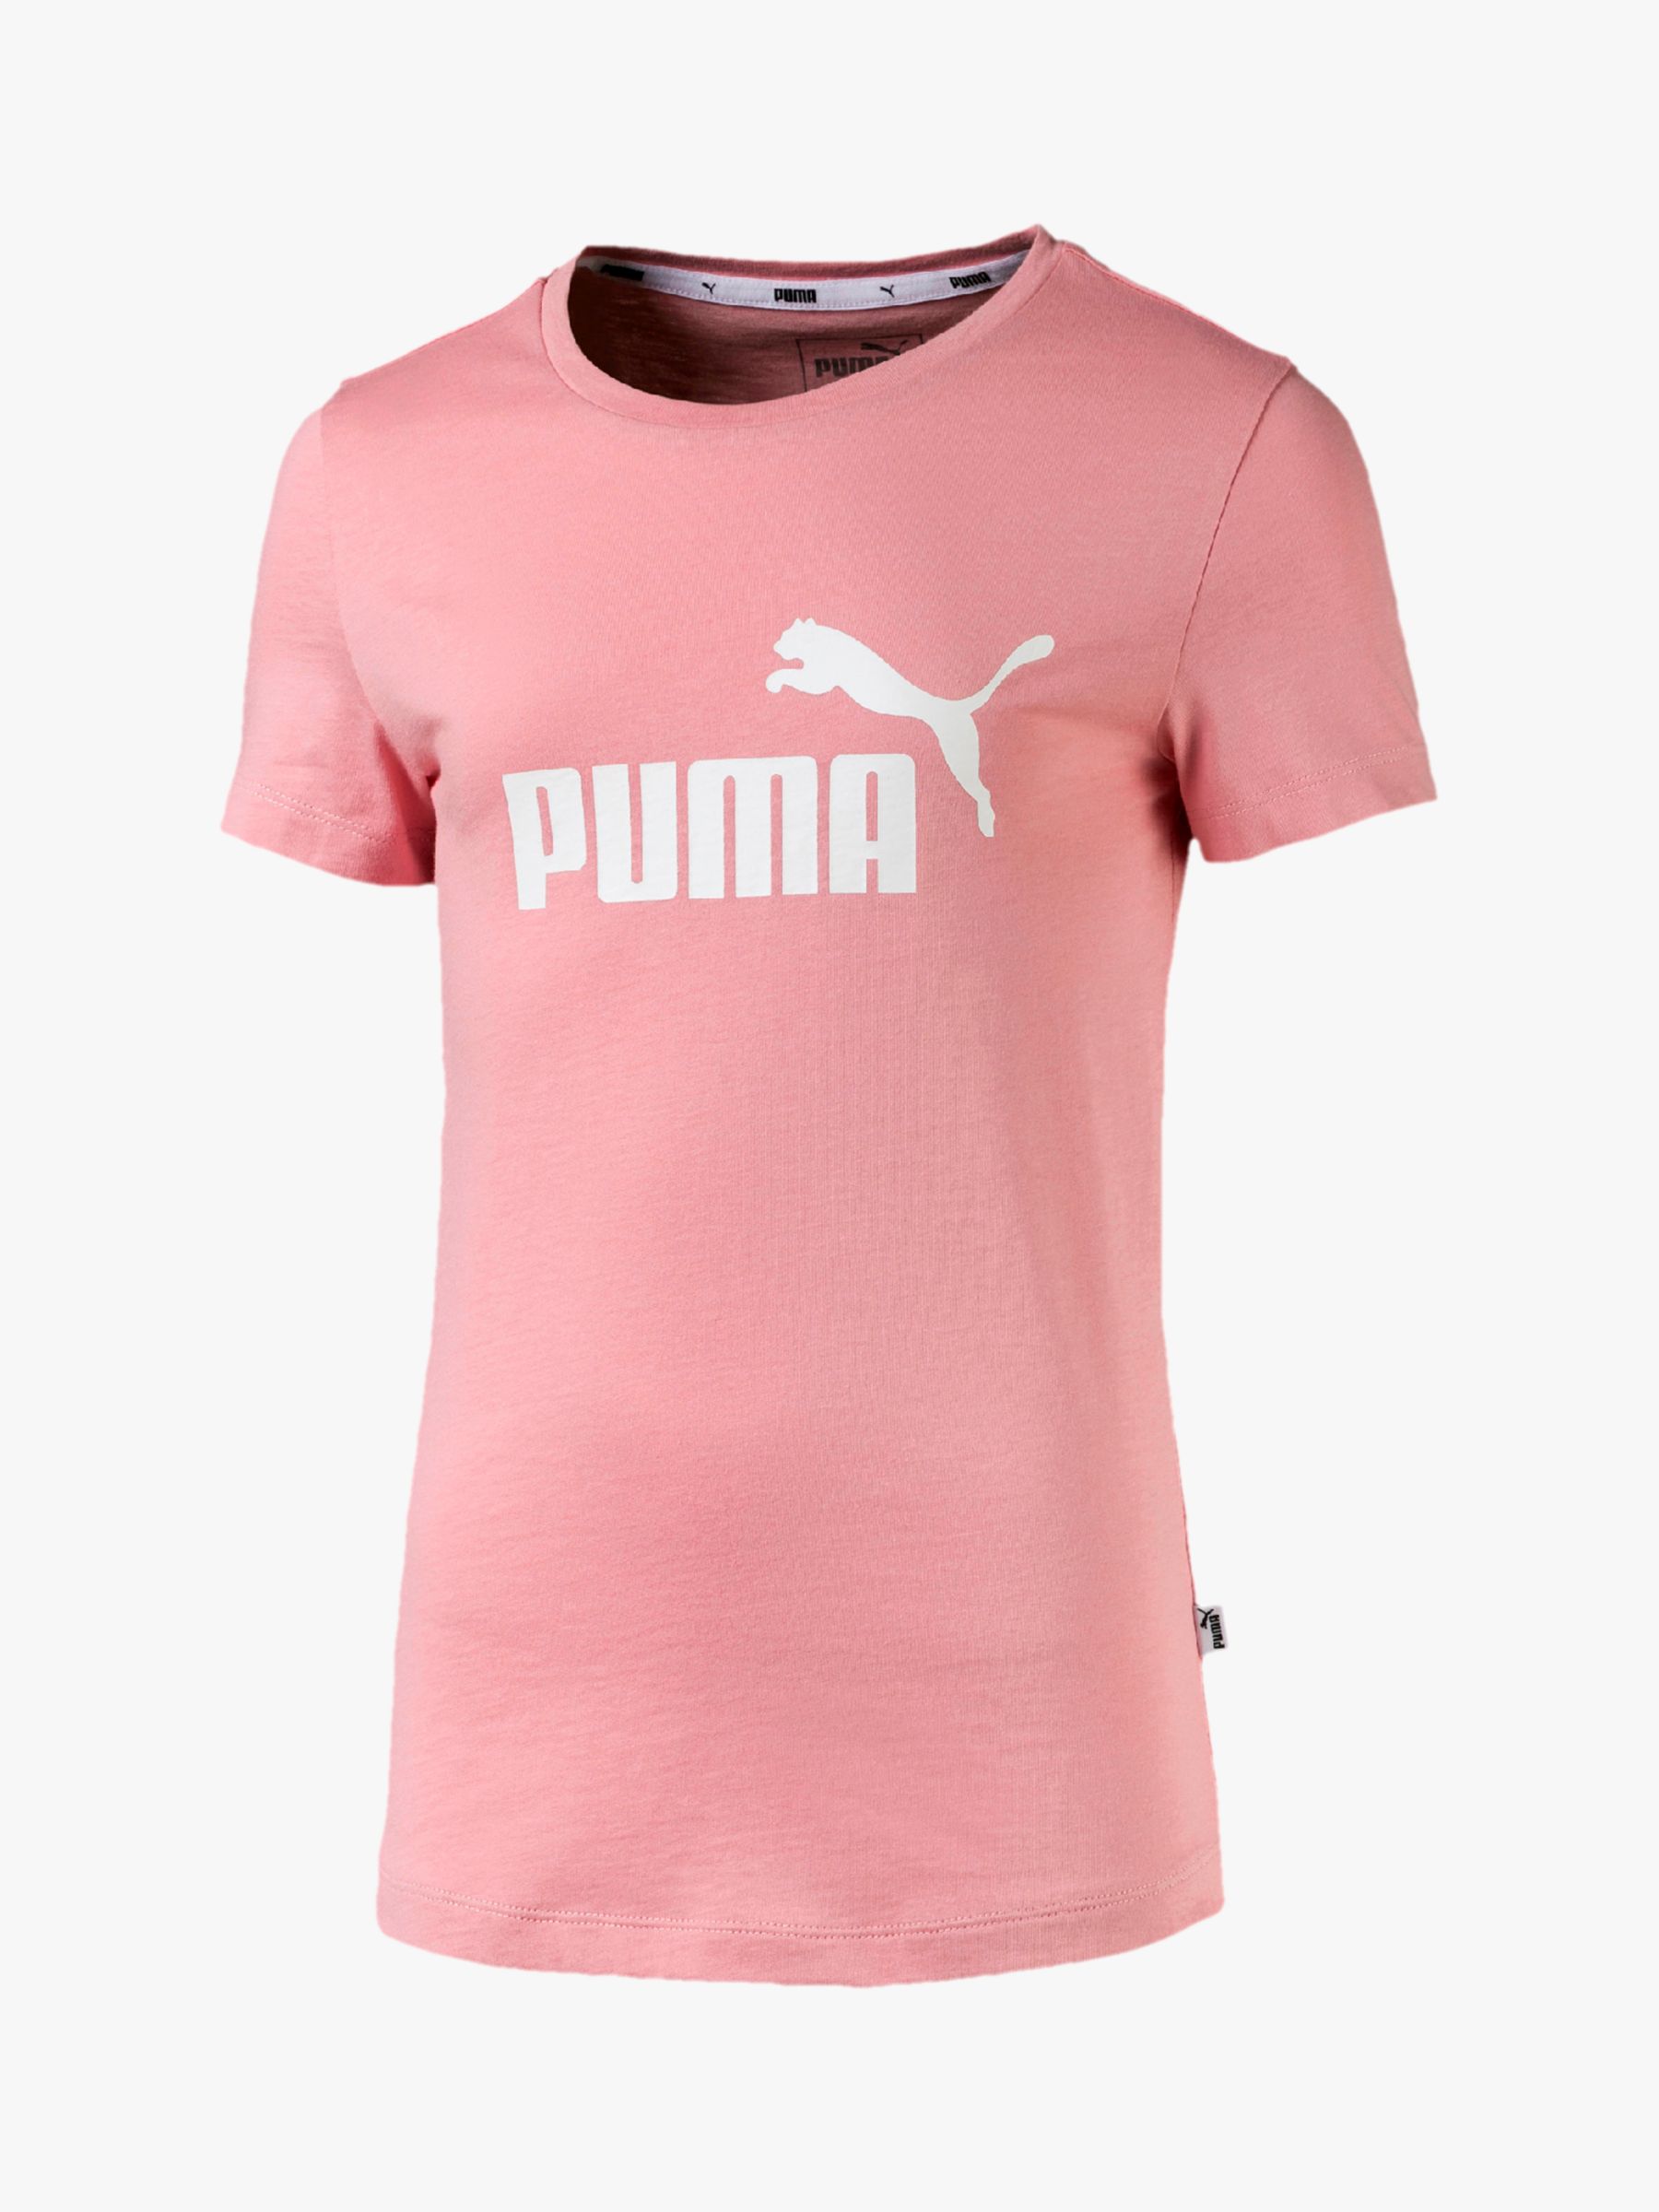 girls puma t shirt